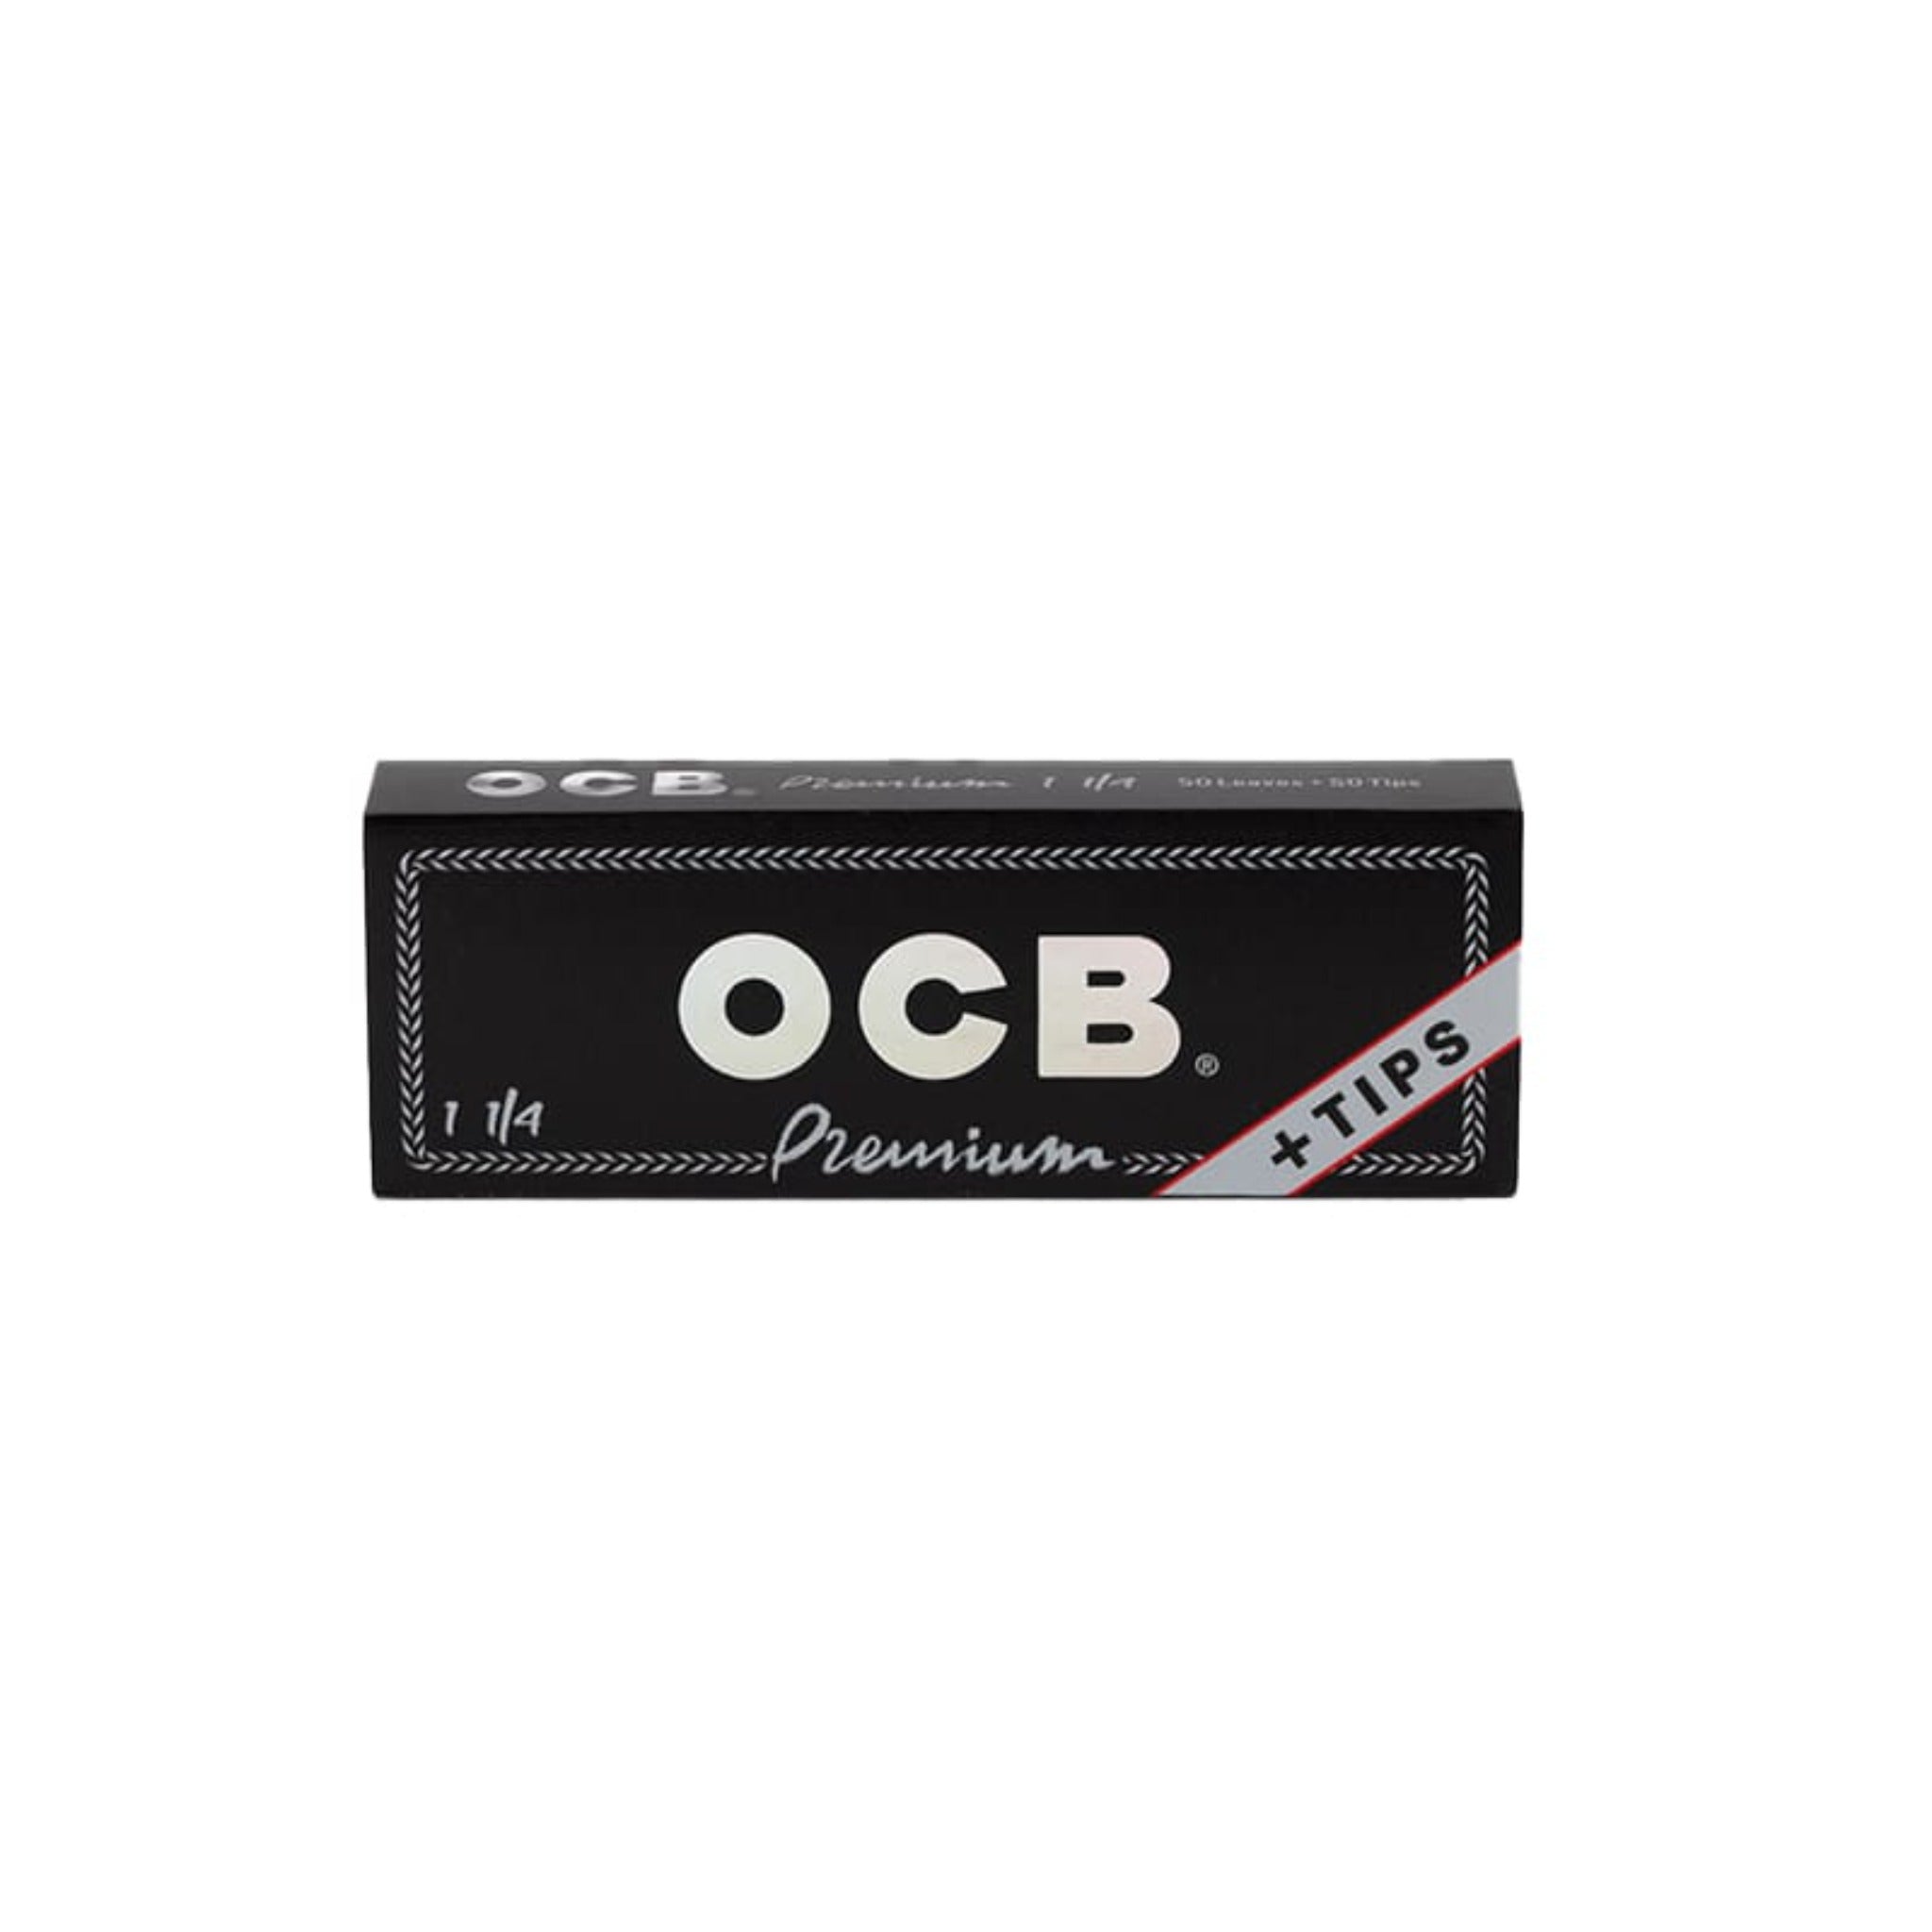 OCB Original Roling Papers + Tips Rolling Papers OCB Premium 1 1/4 